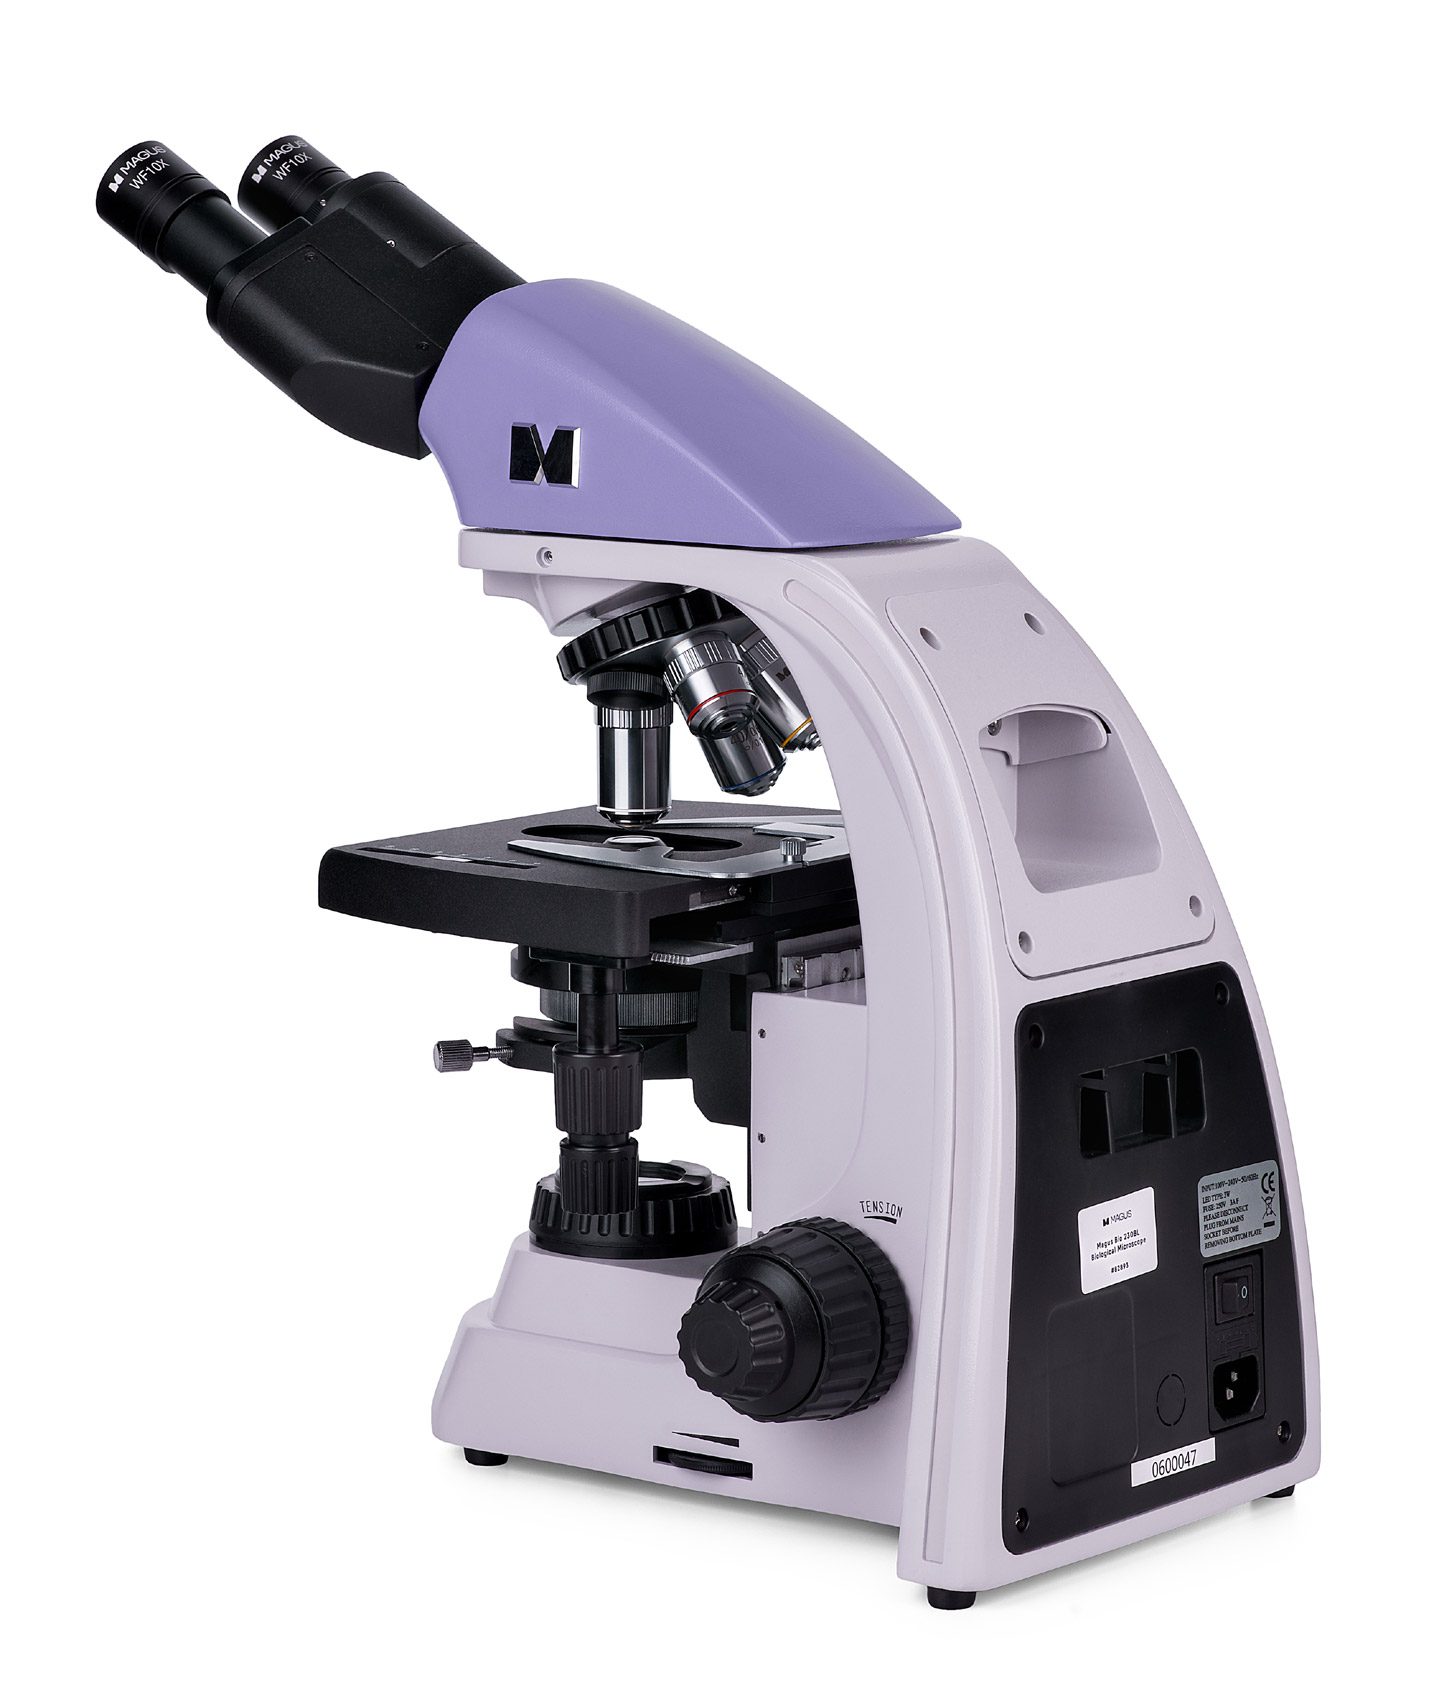 CLZ192 MAGUS Bio 230BL Biyoloji Mikroskobu (4172)